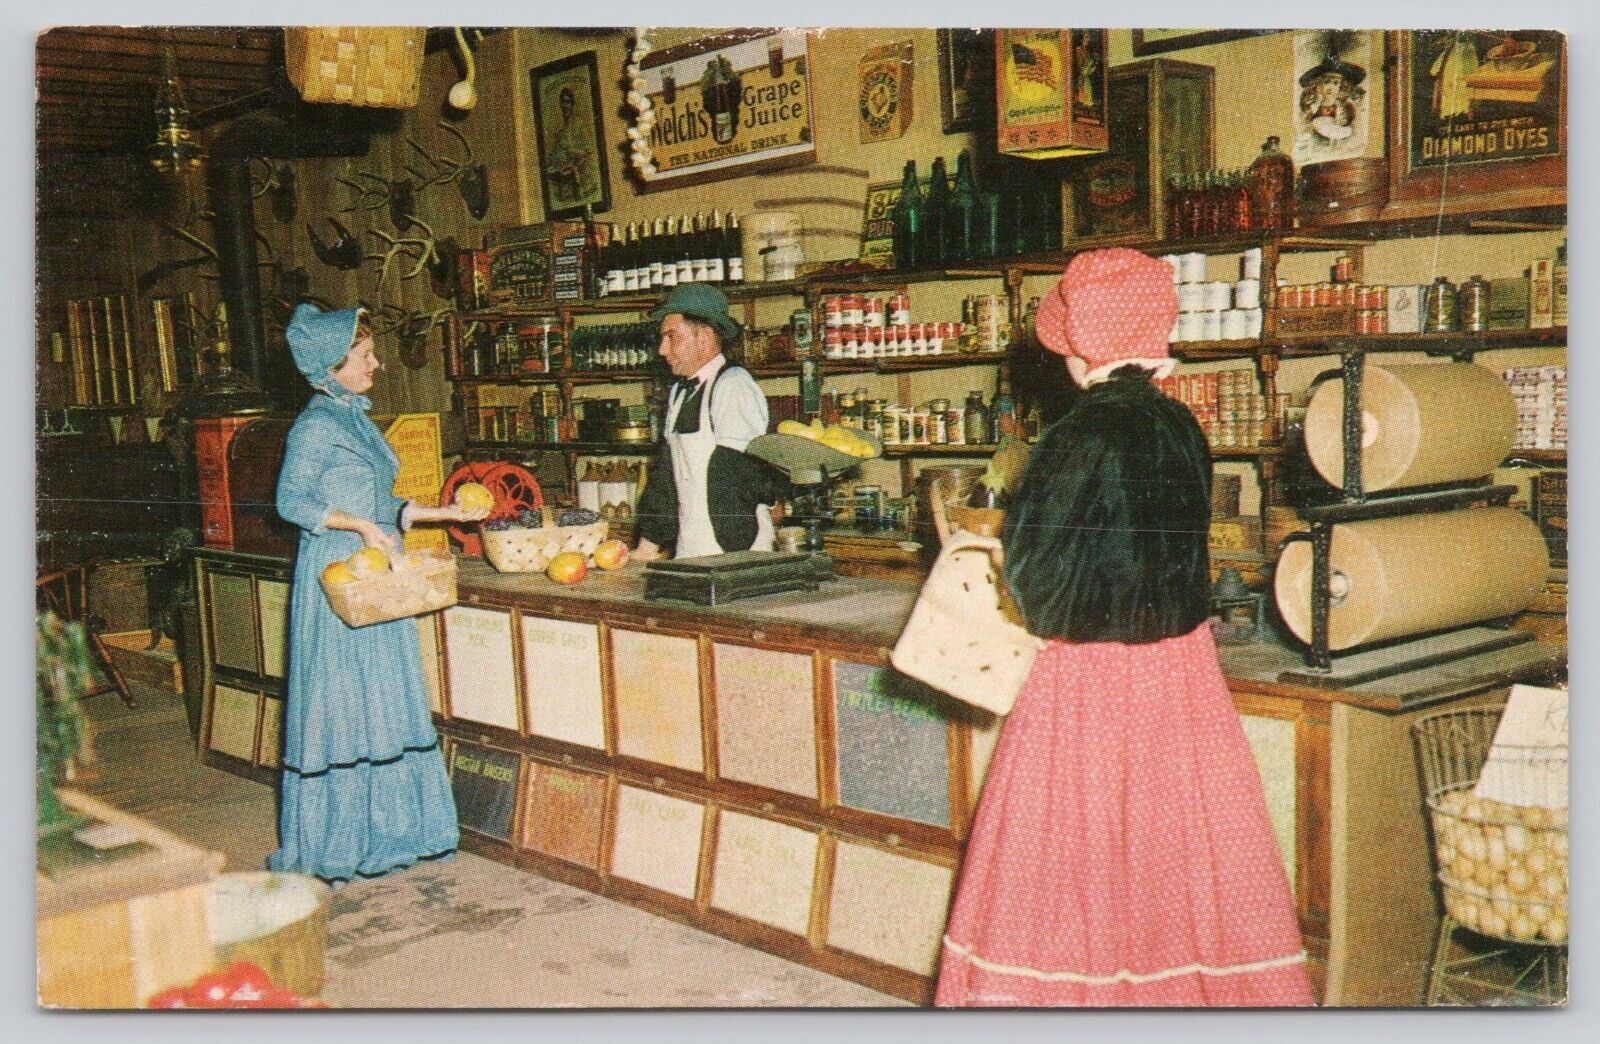 Oldest Store Museum St. Augustine Florida Vintage Postcard inside view